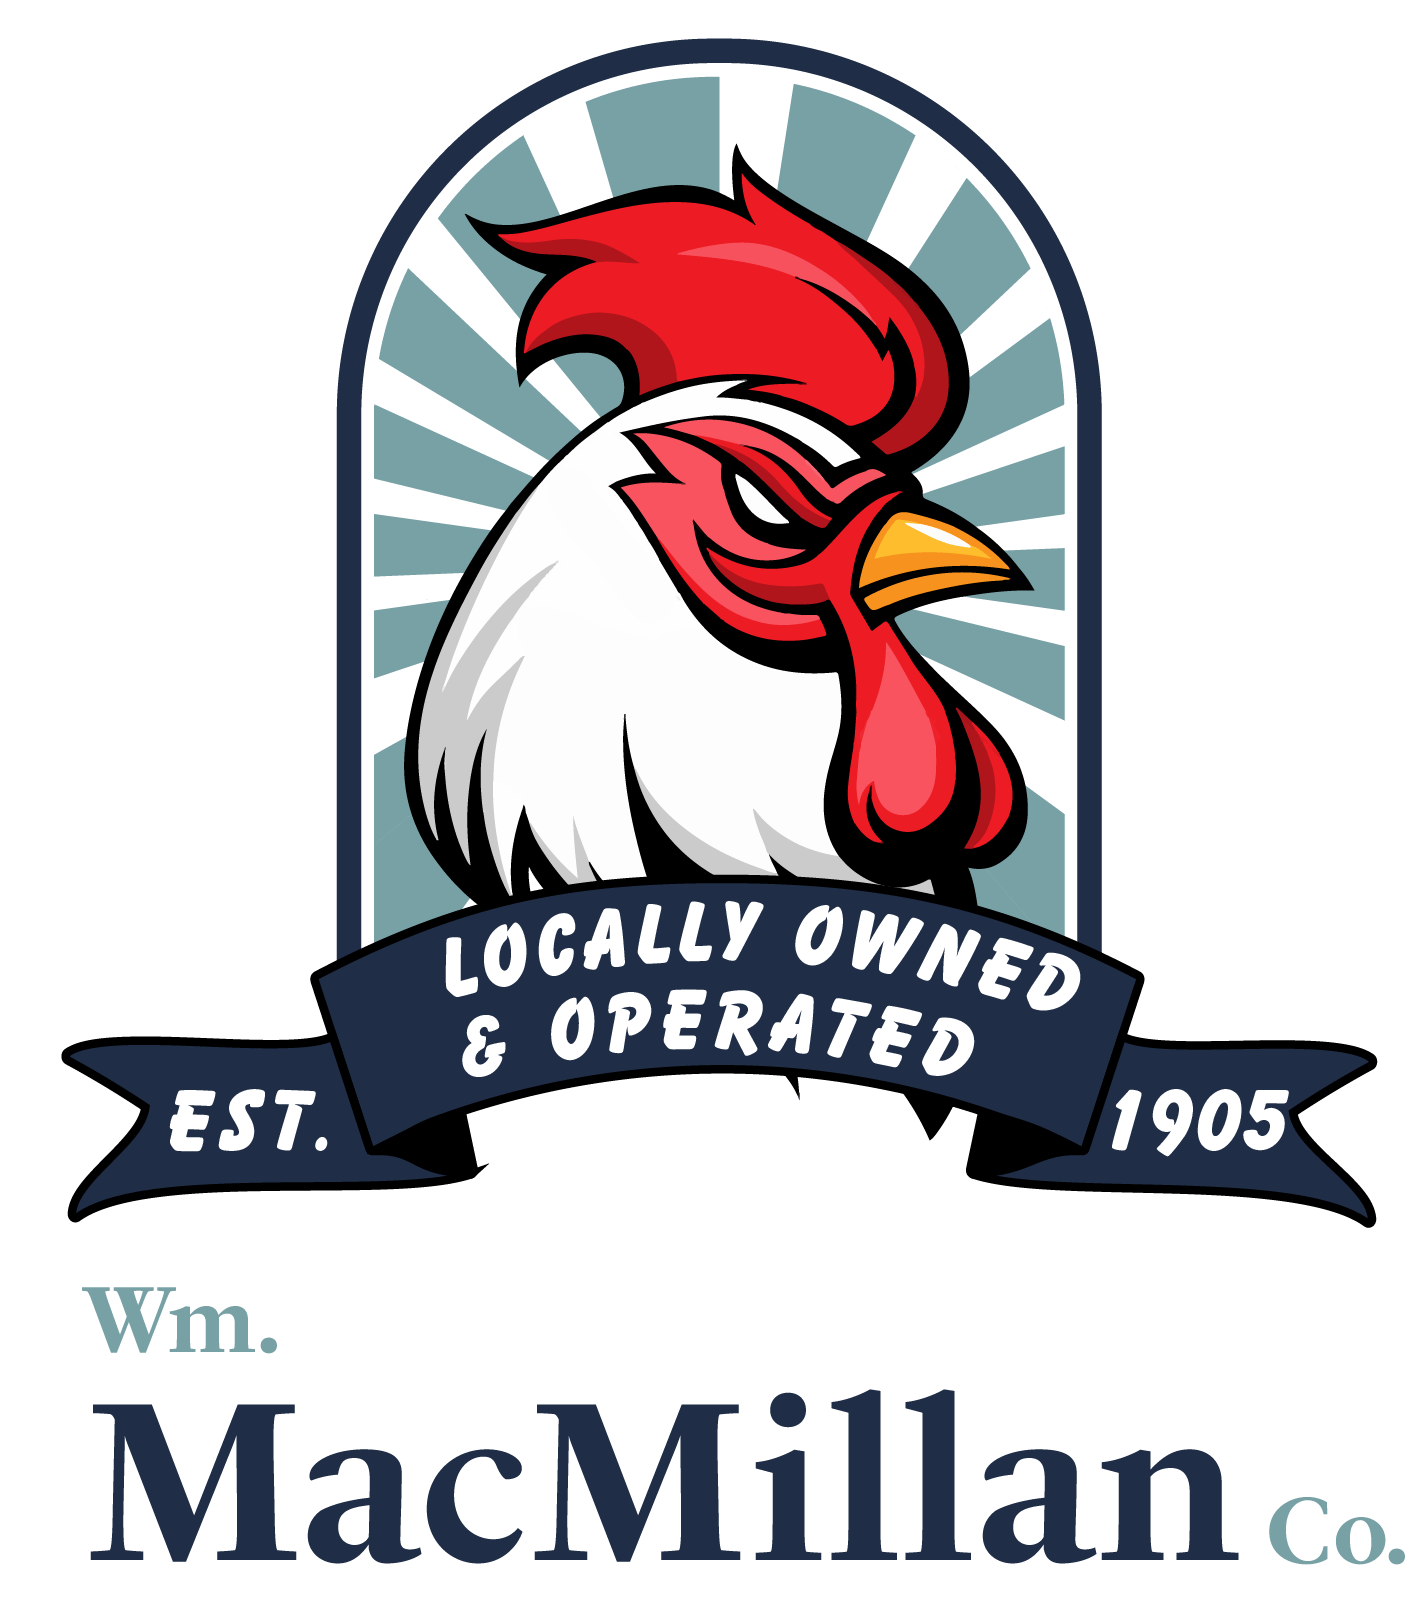 William MacMillan Co logo